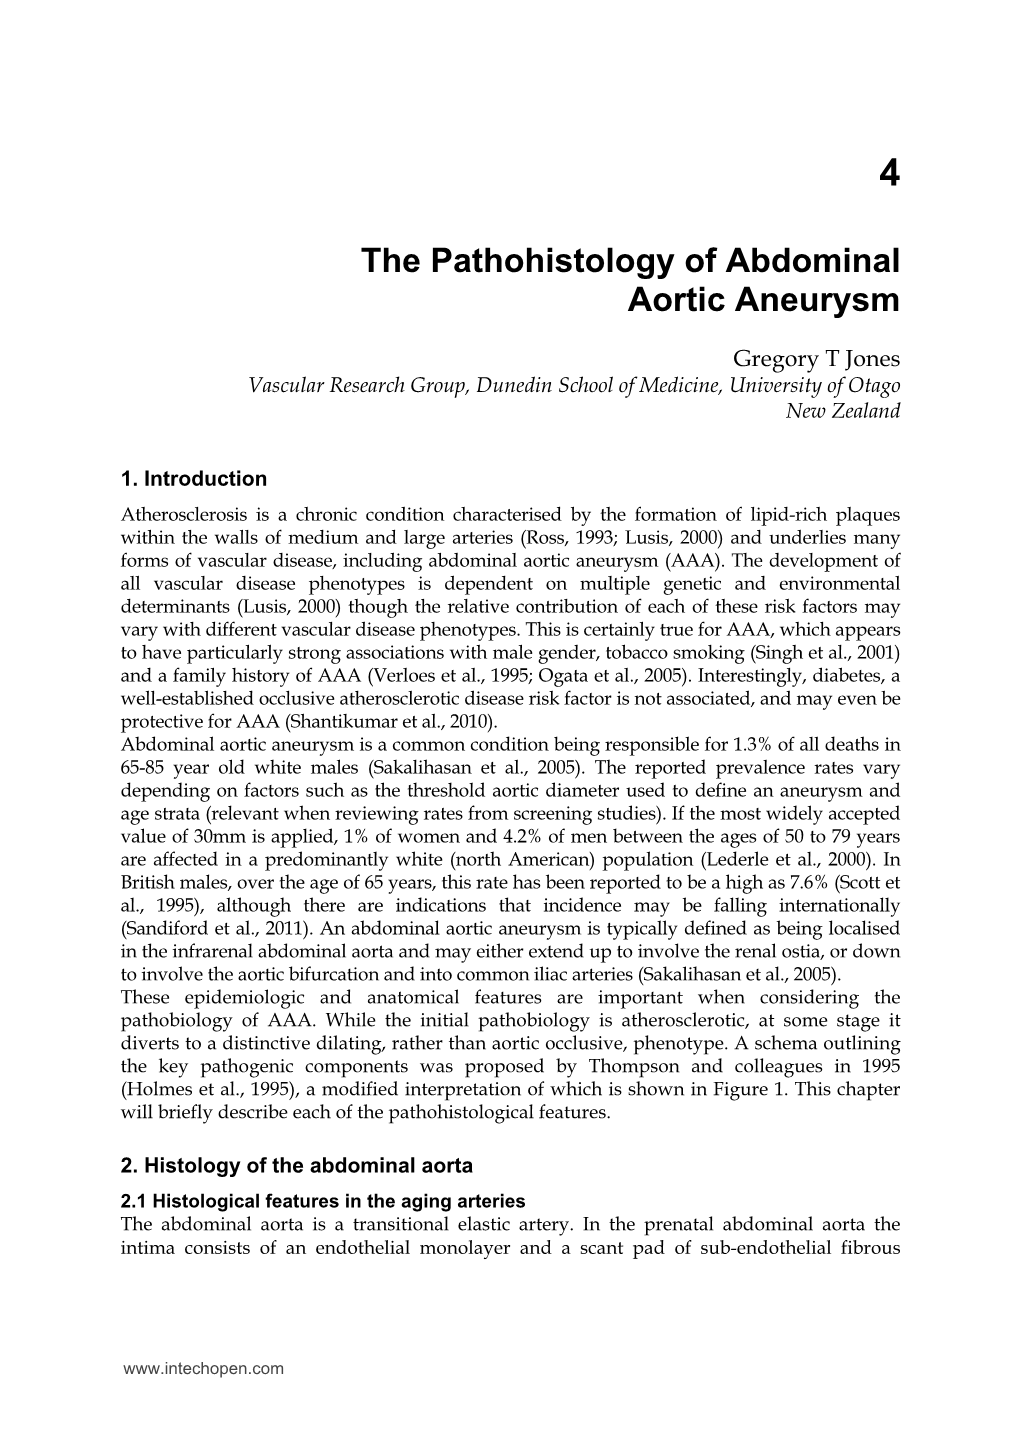 The Pathohistology of Abdominal Aortic Aneurysm